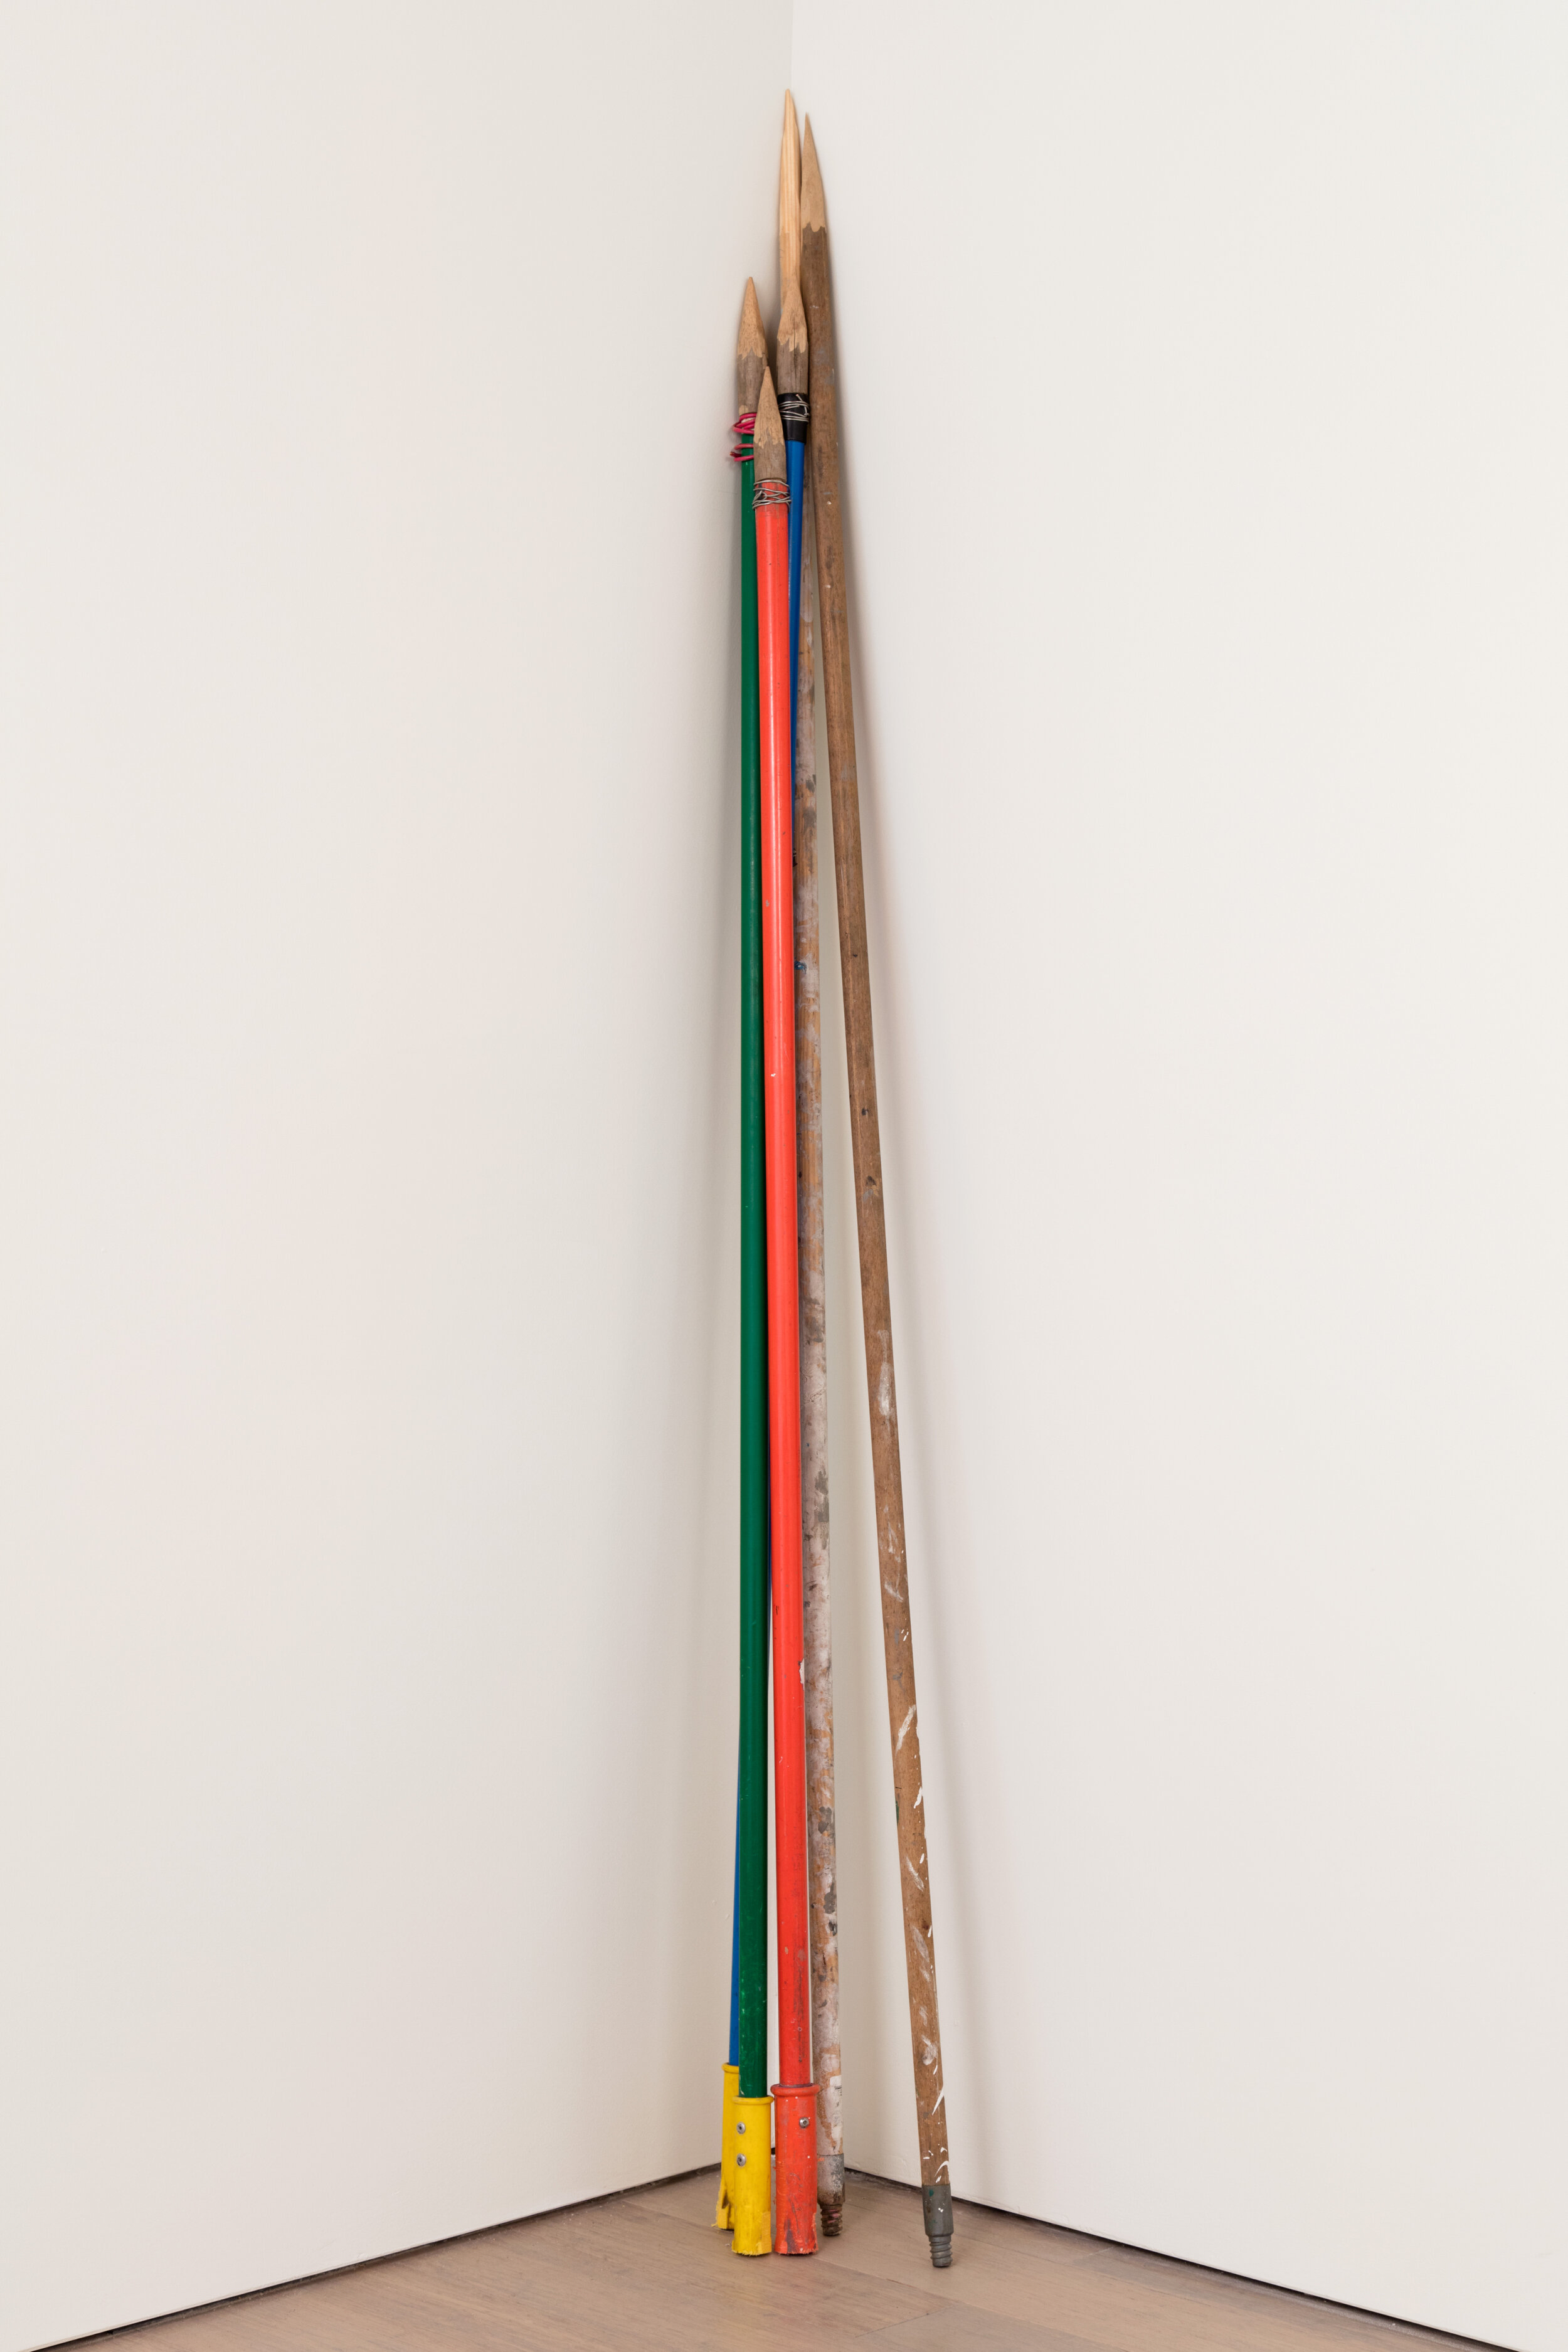   Spears , 2018, reclaimed mop sticks, wire, wood, 65" x 15" x 20" © Orlee Malka studio 